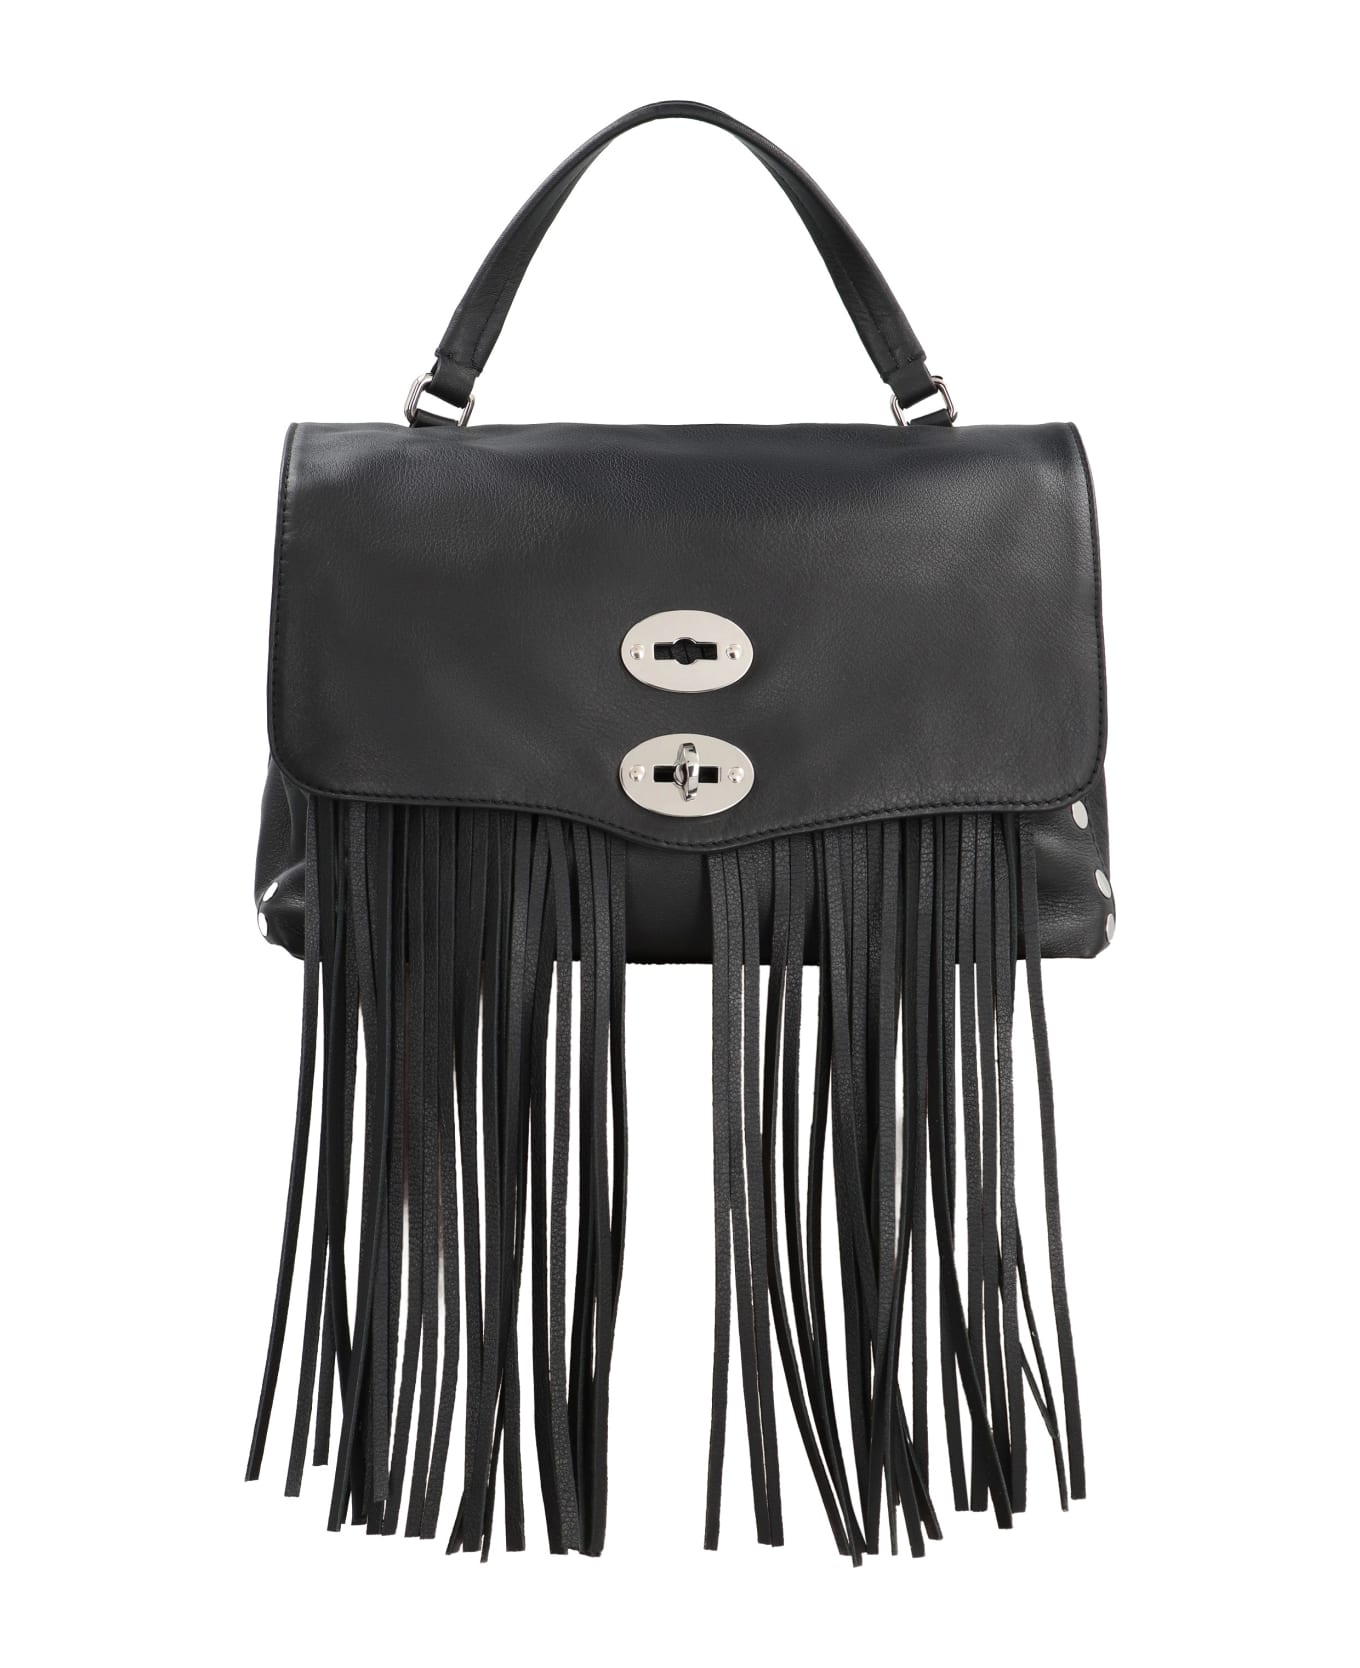 Zanellato Postina S Leather Handbag - black